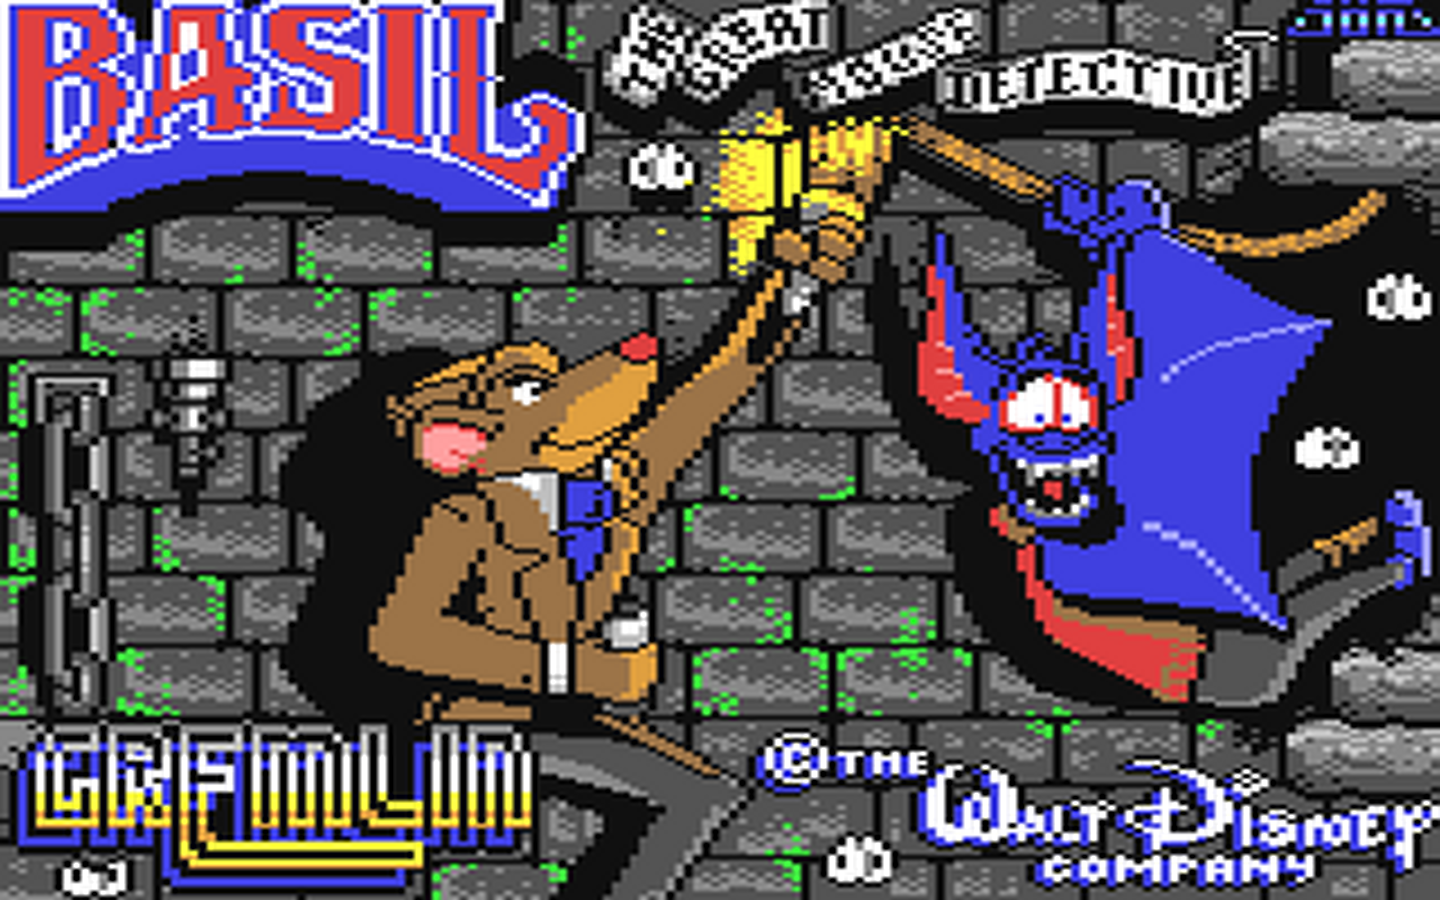 C64 GameBase Basil_the_Great_Mouse_Detective Gremlin_Graphics_Software_Ltd. 1987